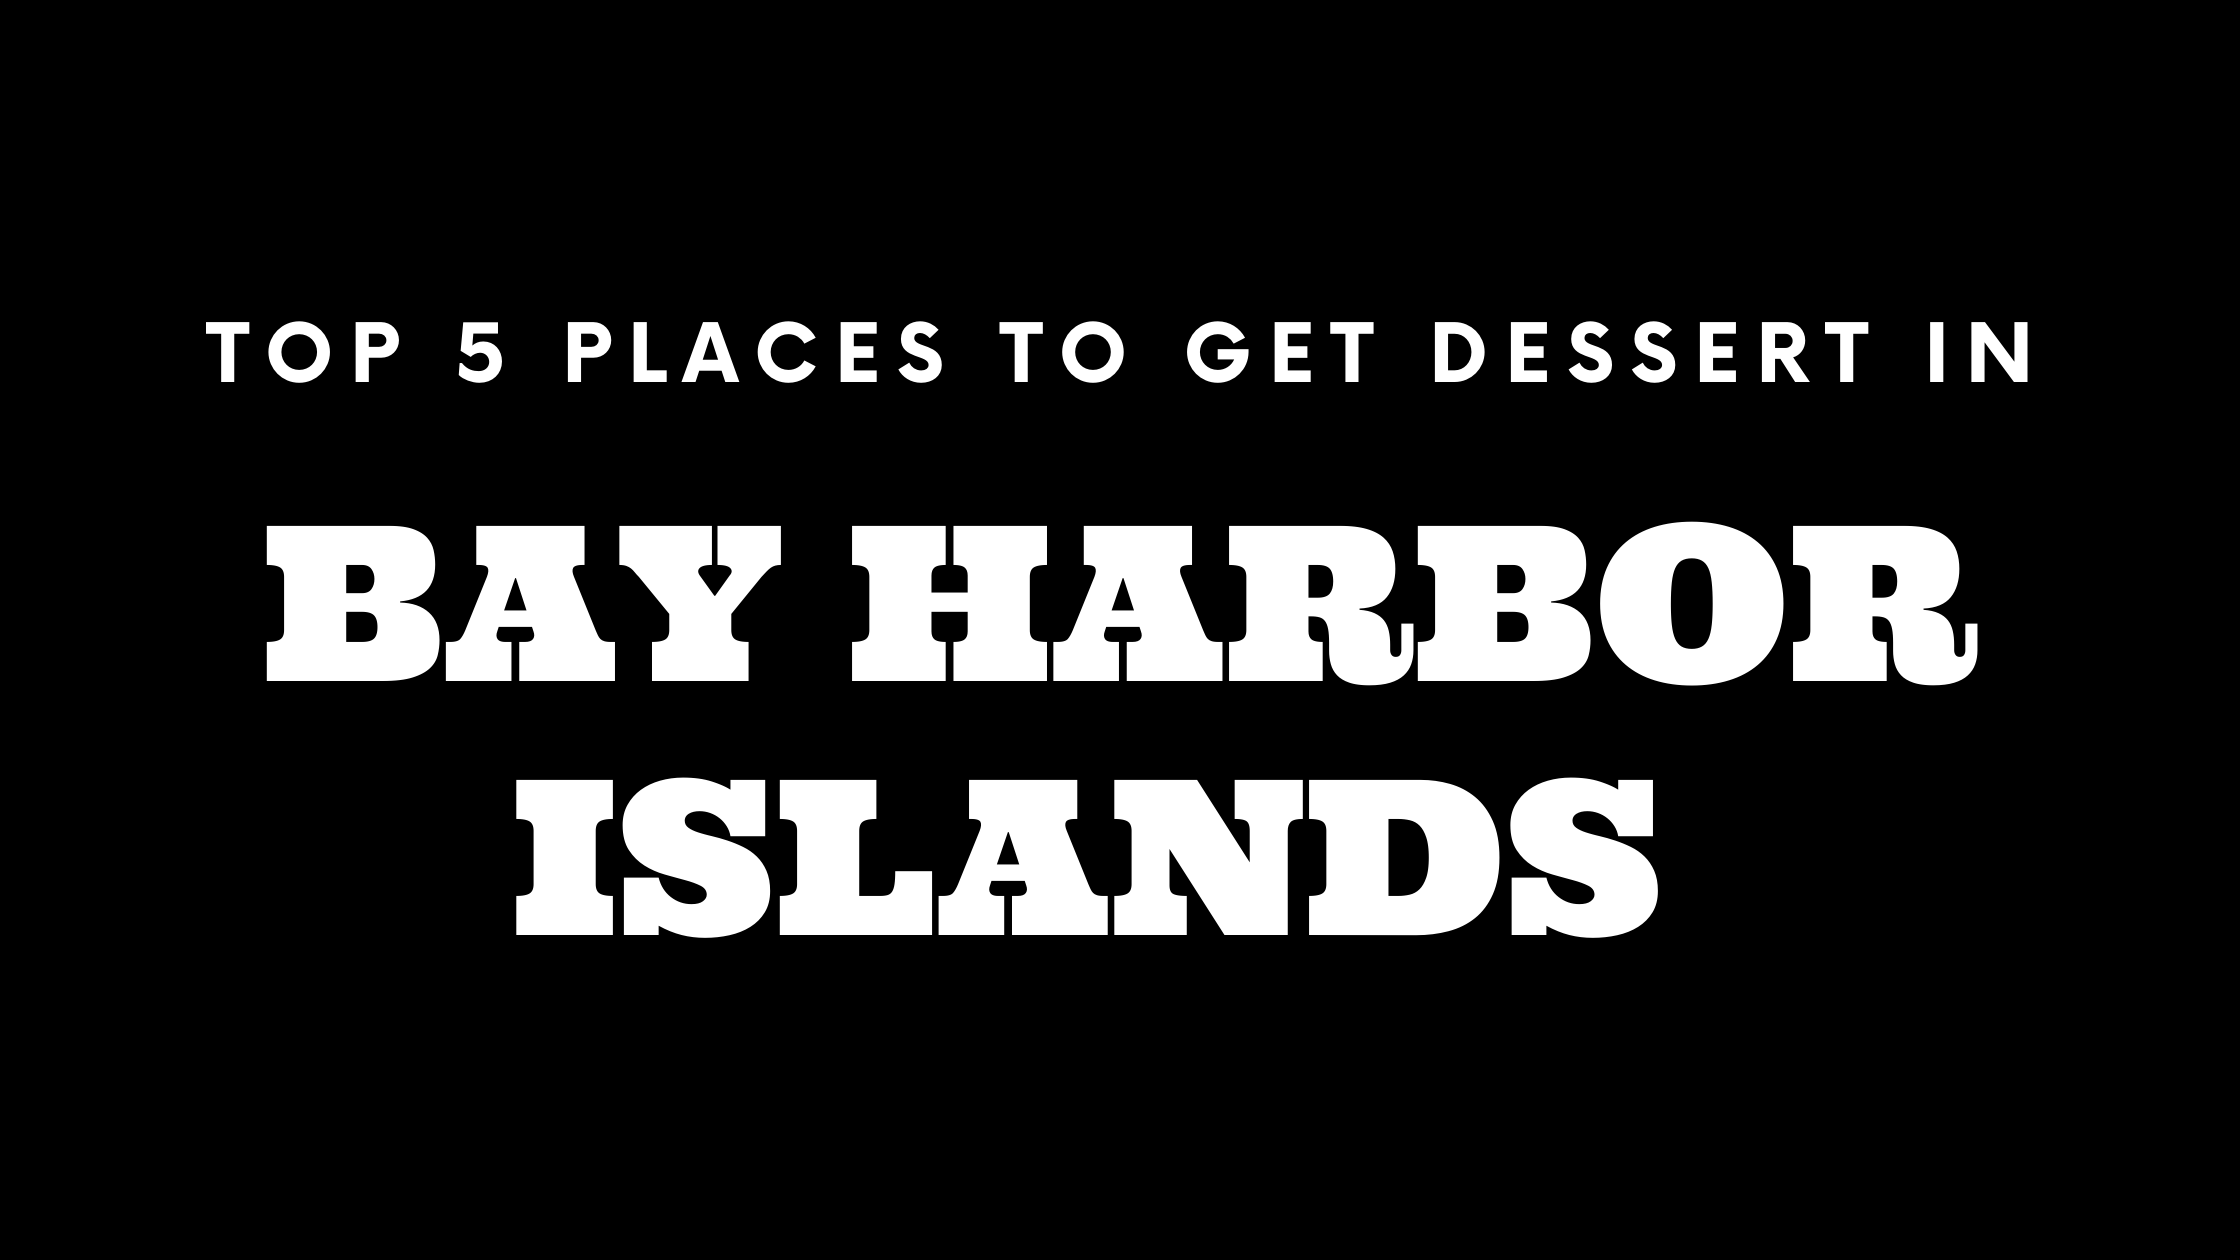 Top 5 Places to Get Dessert in Bay Harbor Islands